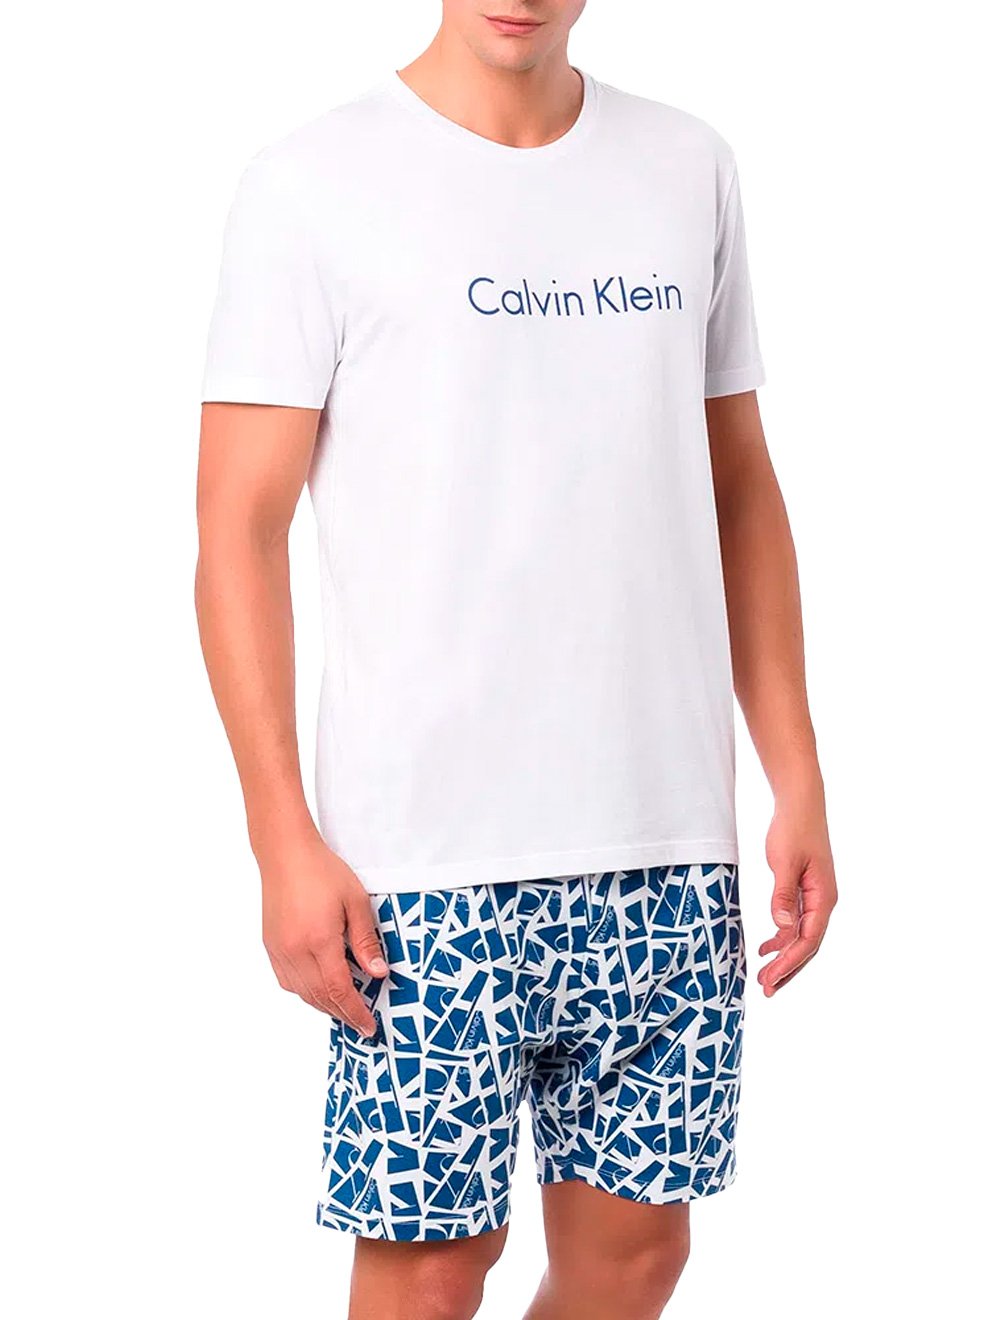 Calvin Klein CK One cotton set in gray and white stripe